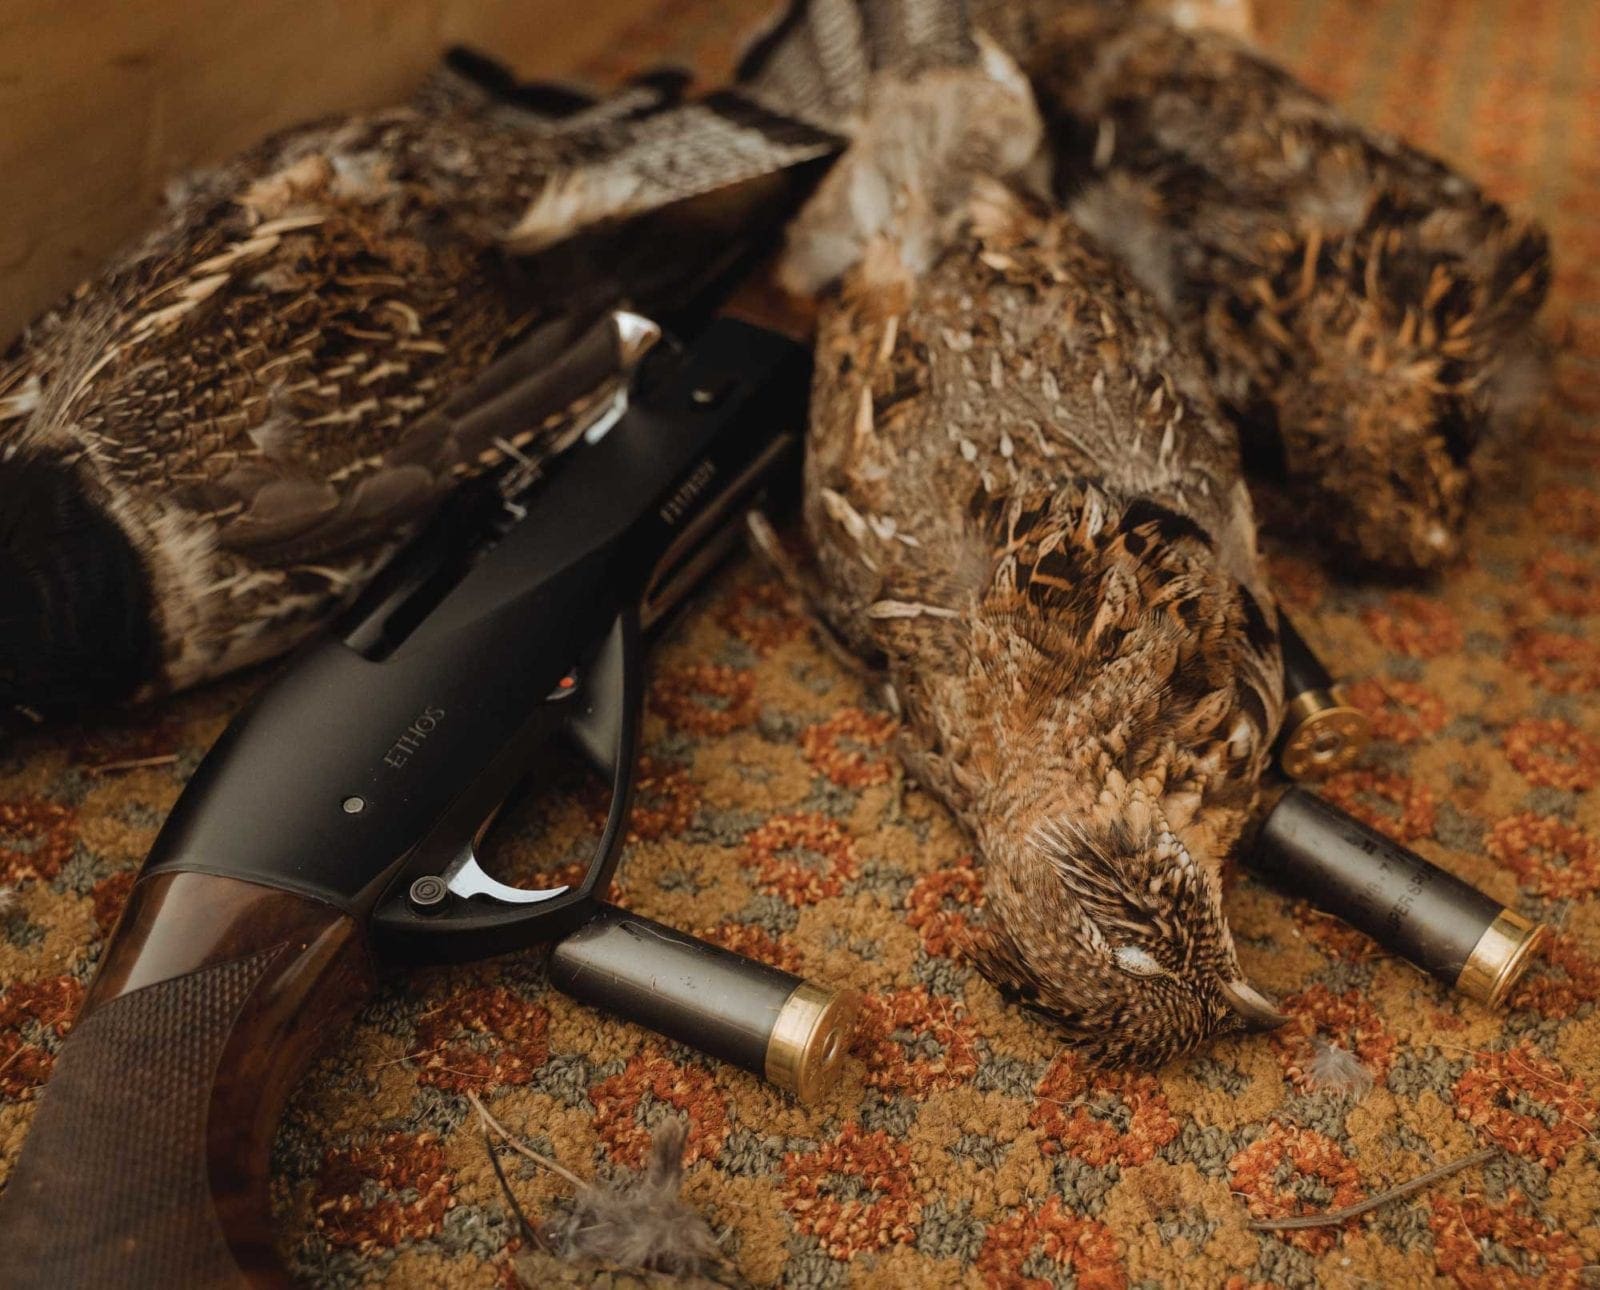 a ruffed grouse hunt using a semi-automatic shotgun.